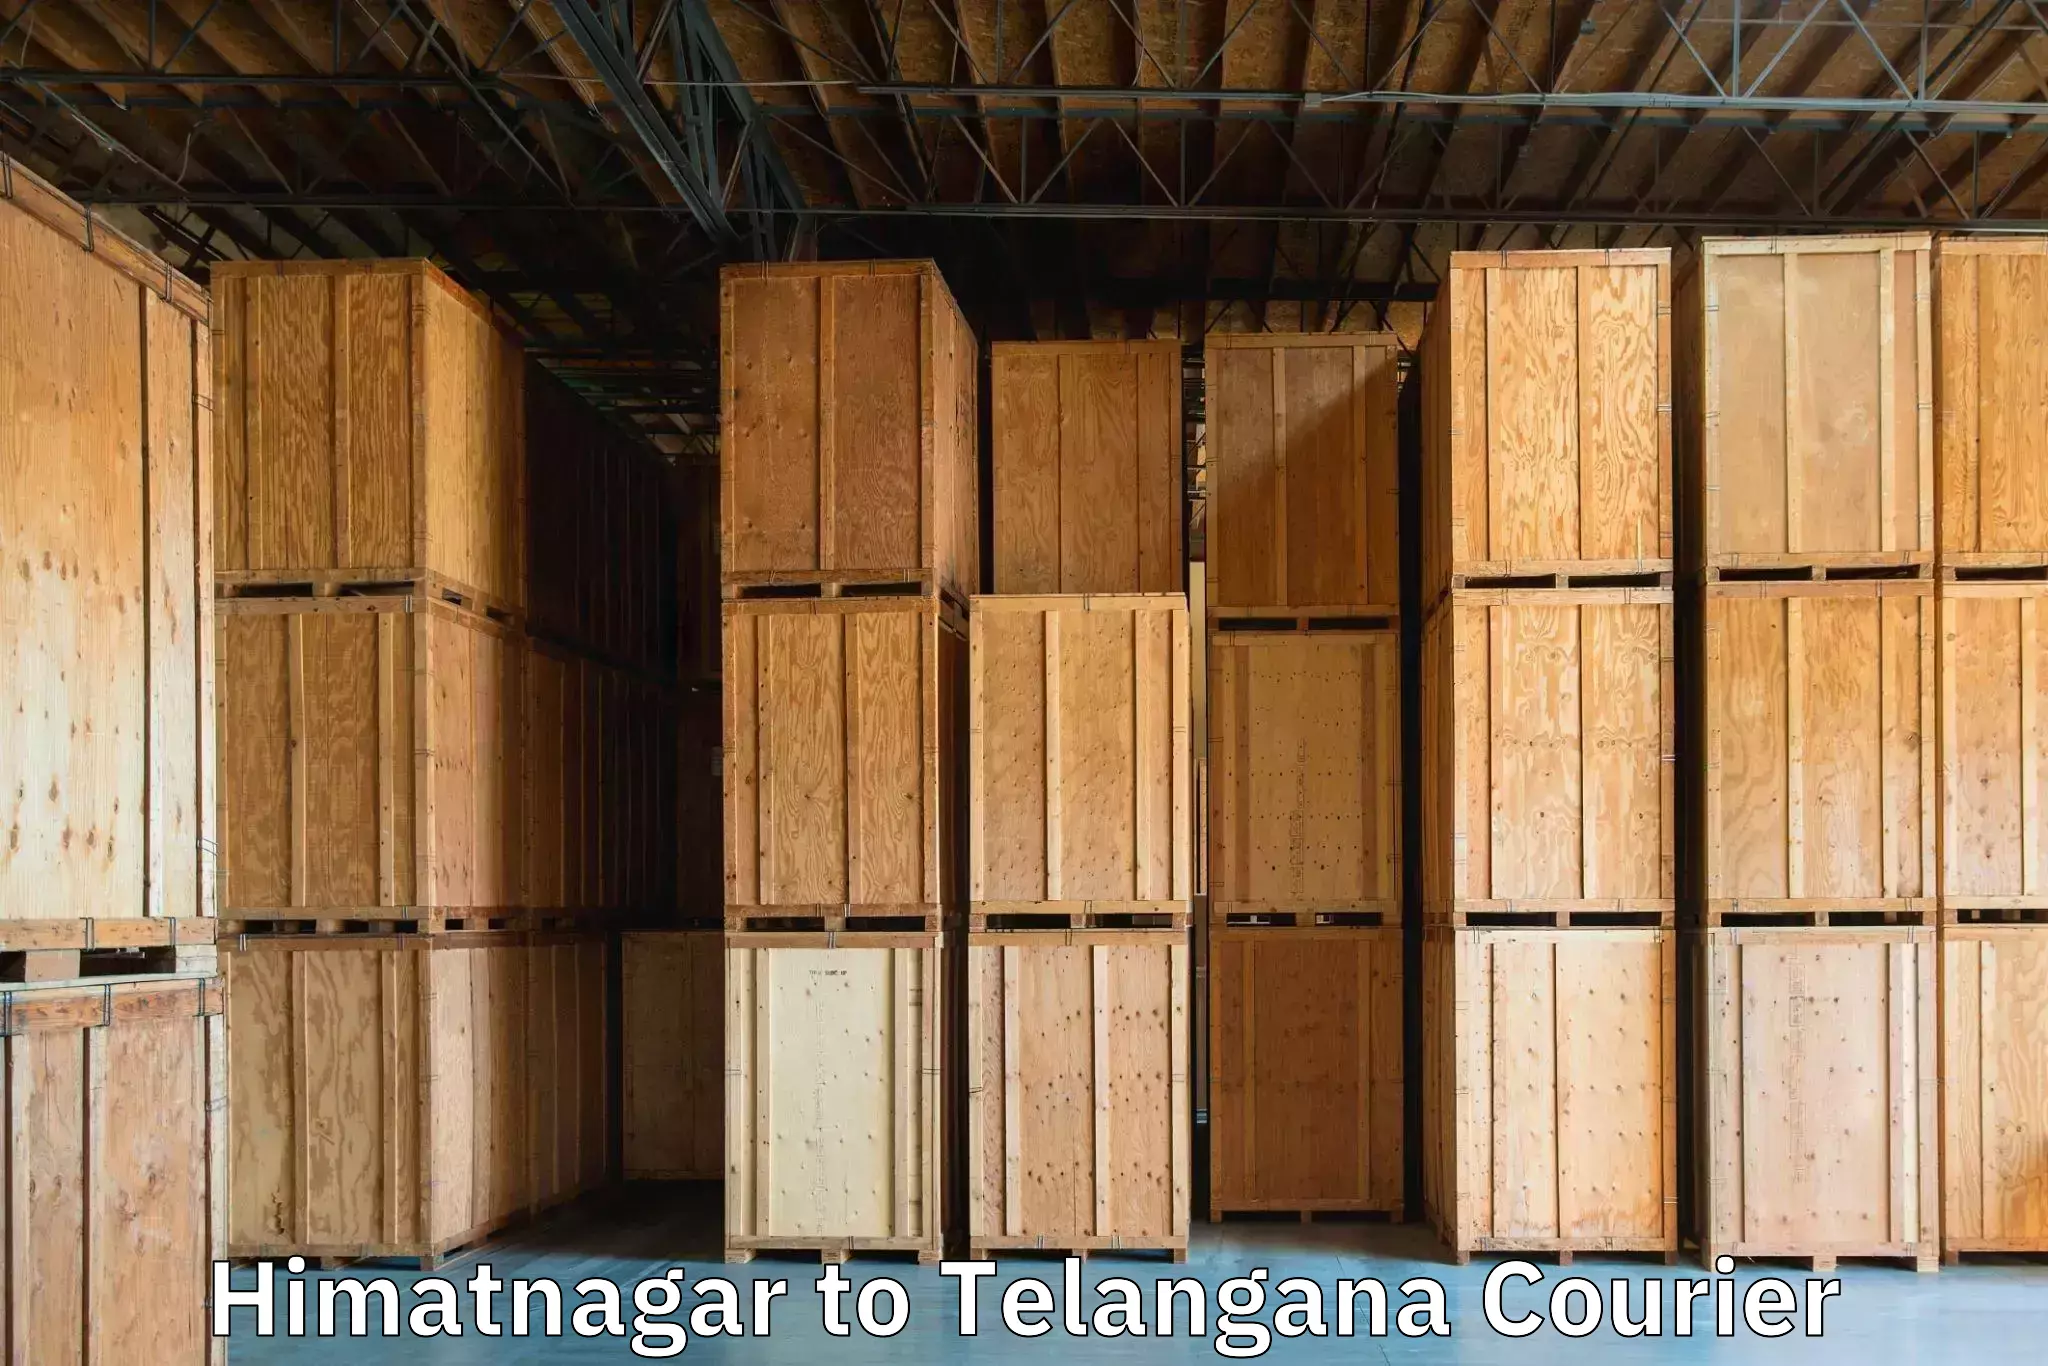 Luggage shipment specialists Himatnagar to Pathipaka